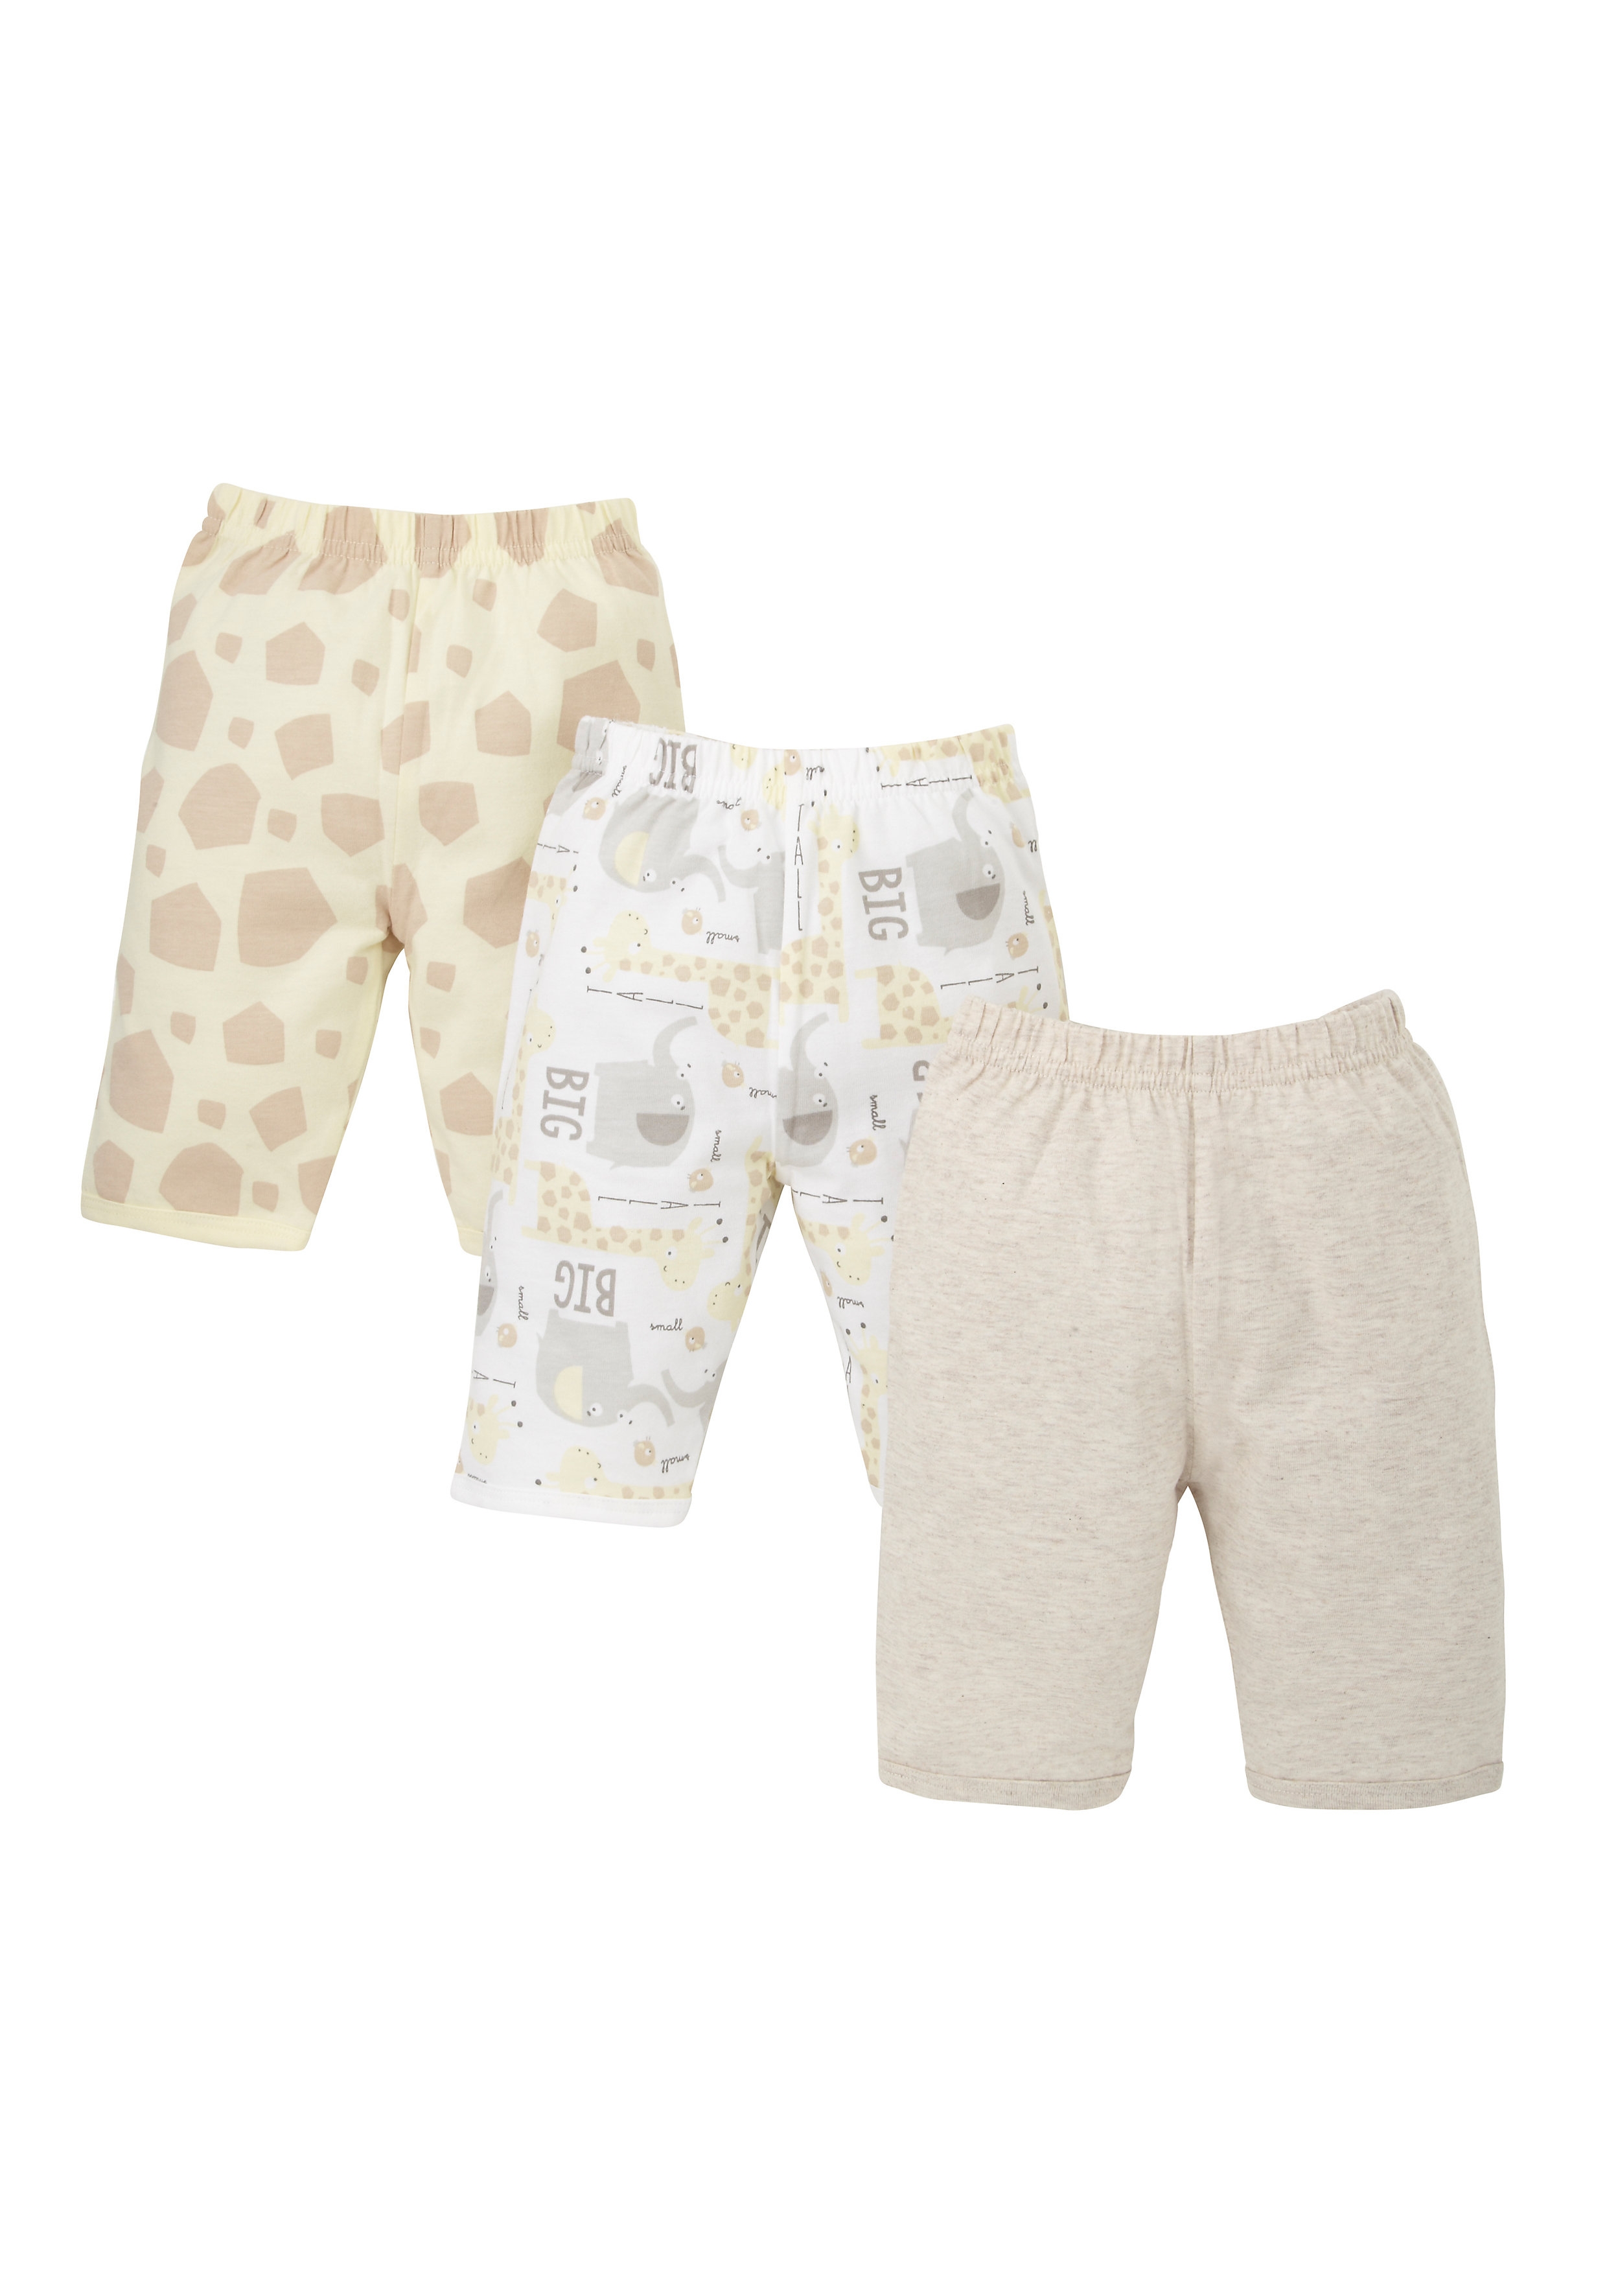 Mothercare | Unisex Pyjama Bottom Set - Pack of 3 - Multicolor 0